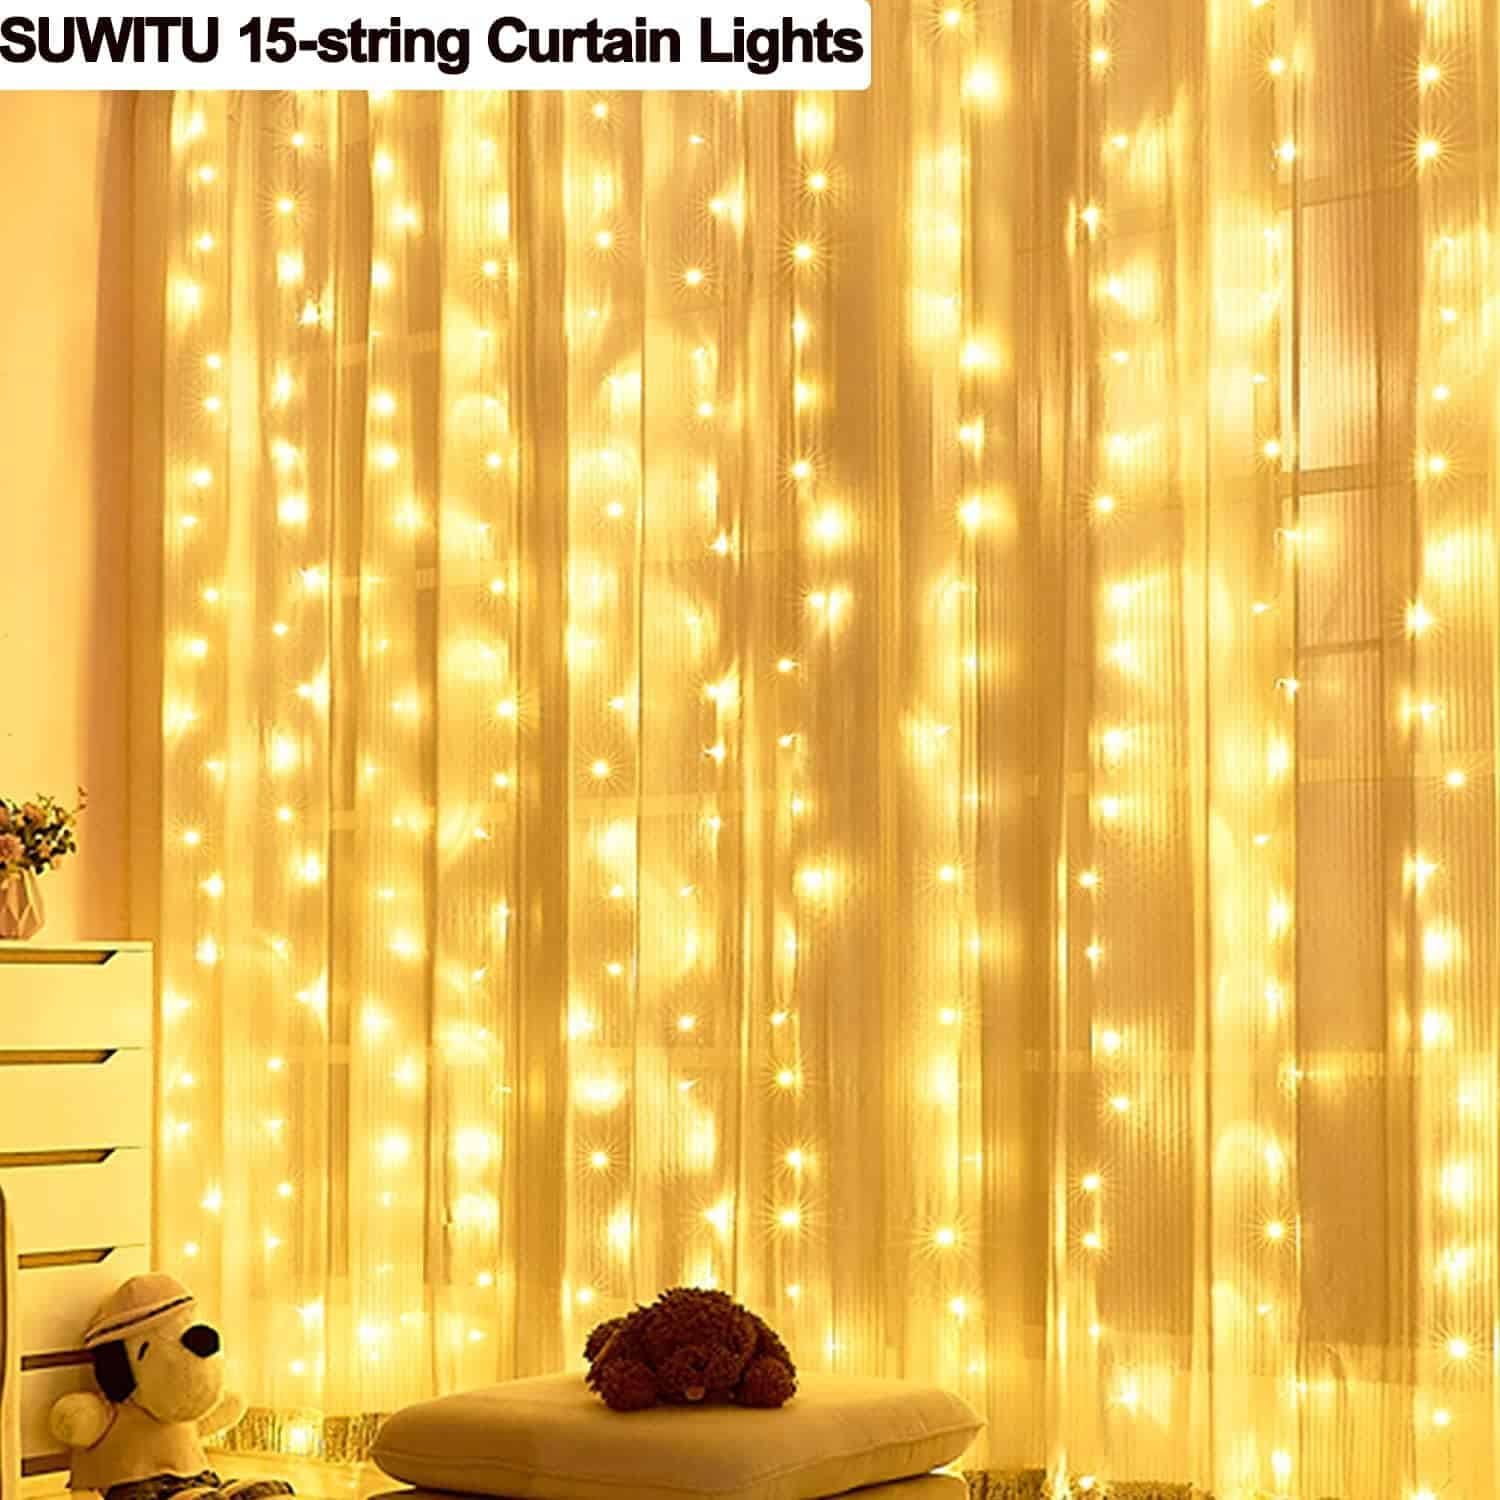 SUWITU Fairy Curtain Lights Review